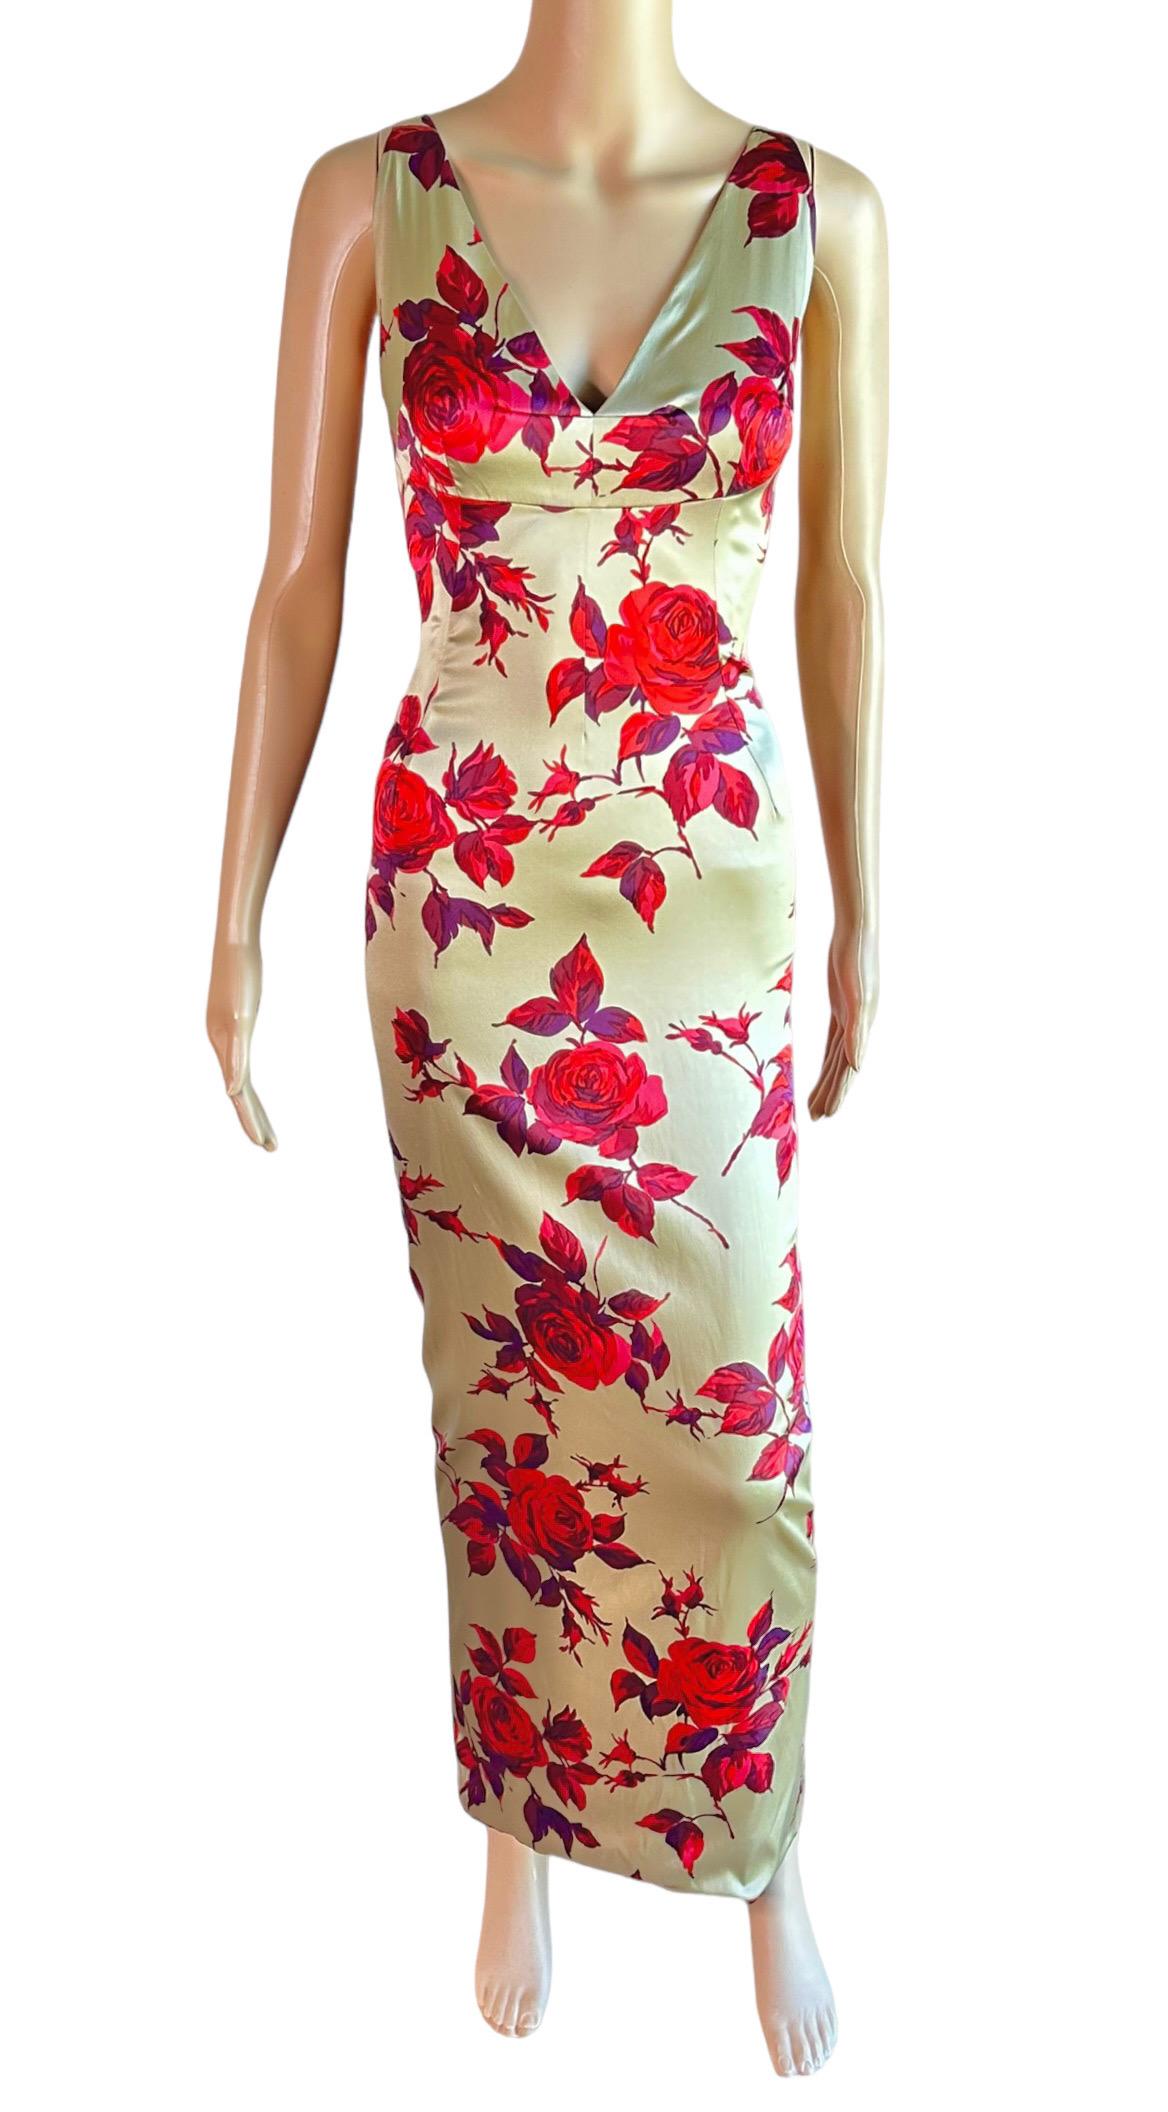 Dolce & Gabbana 1990's Vintage Unworn Silk Floral Rose Print Evening Dress Gown For Sale 6